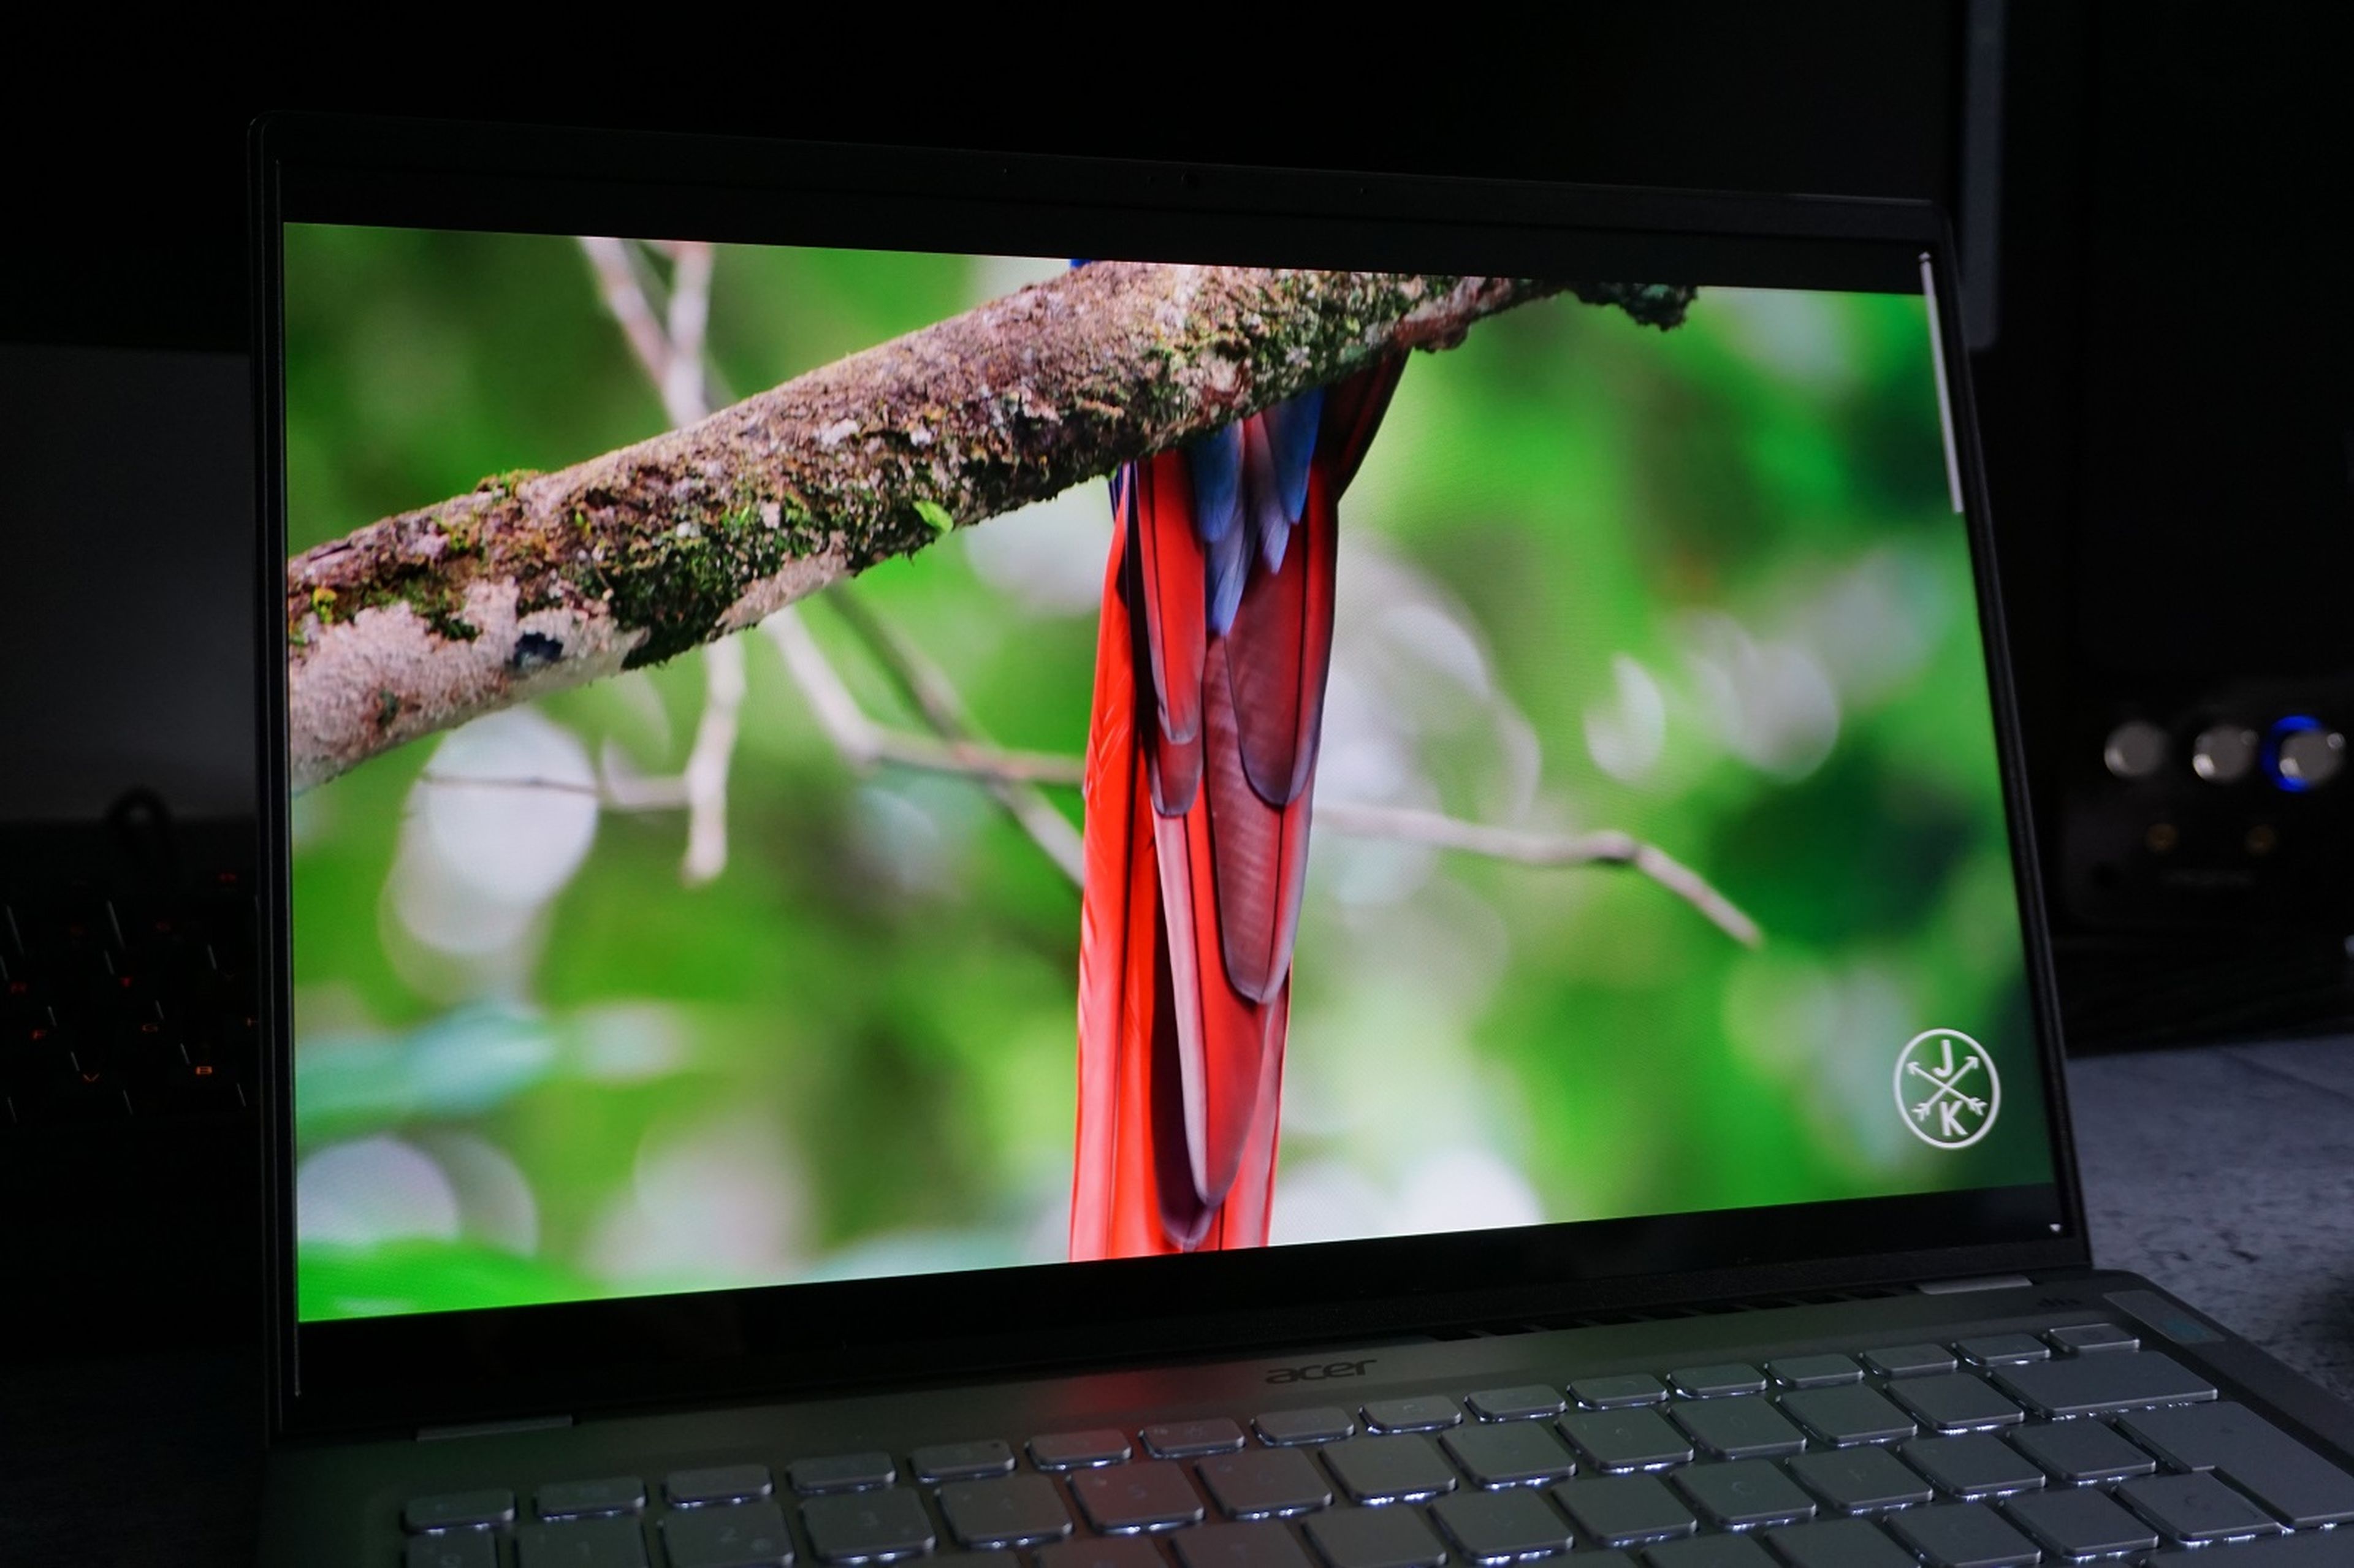 Acer Swift 3 OLED